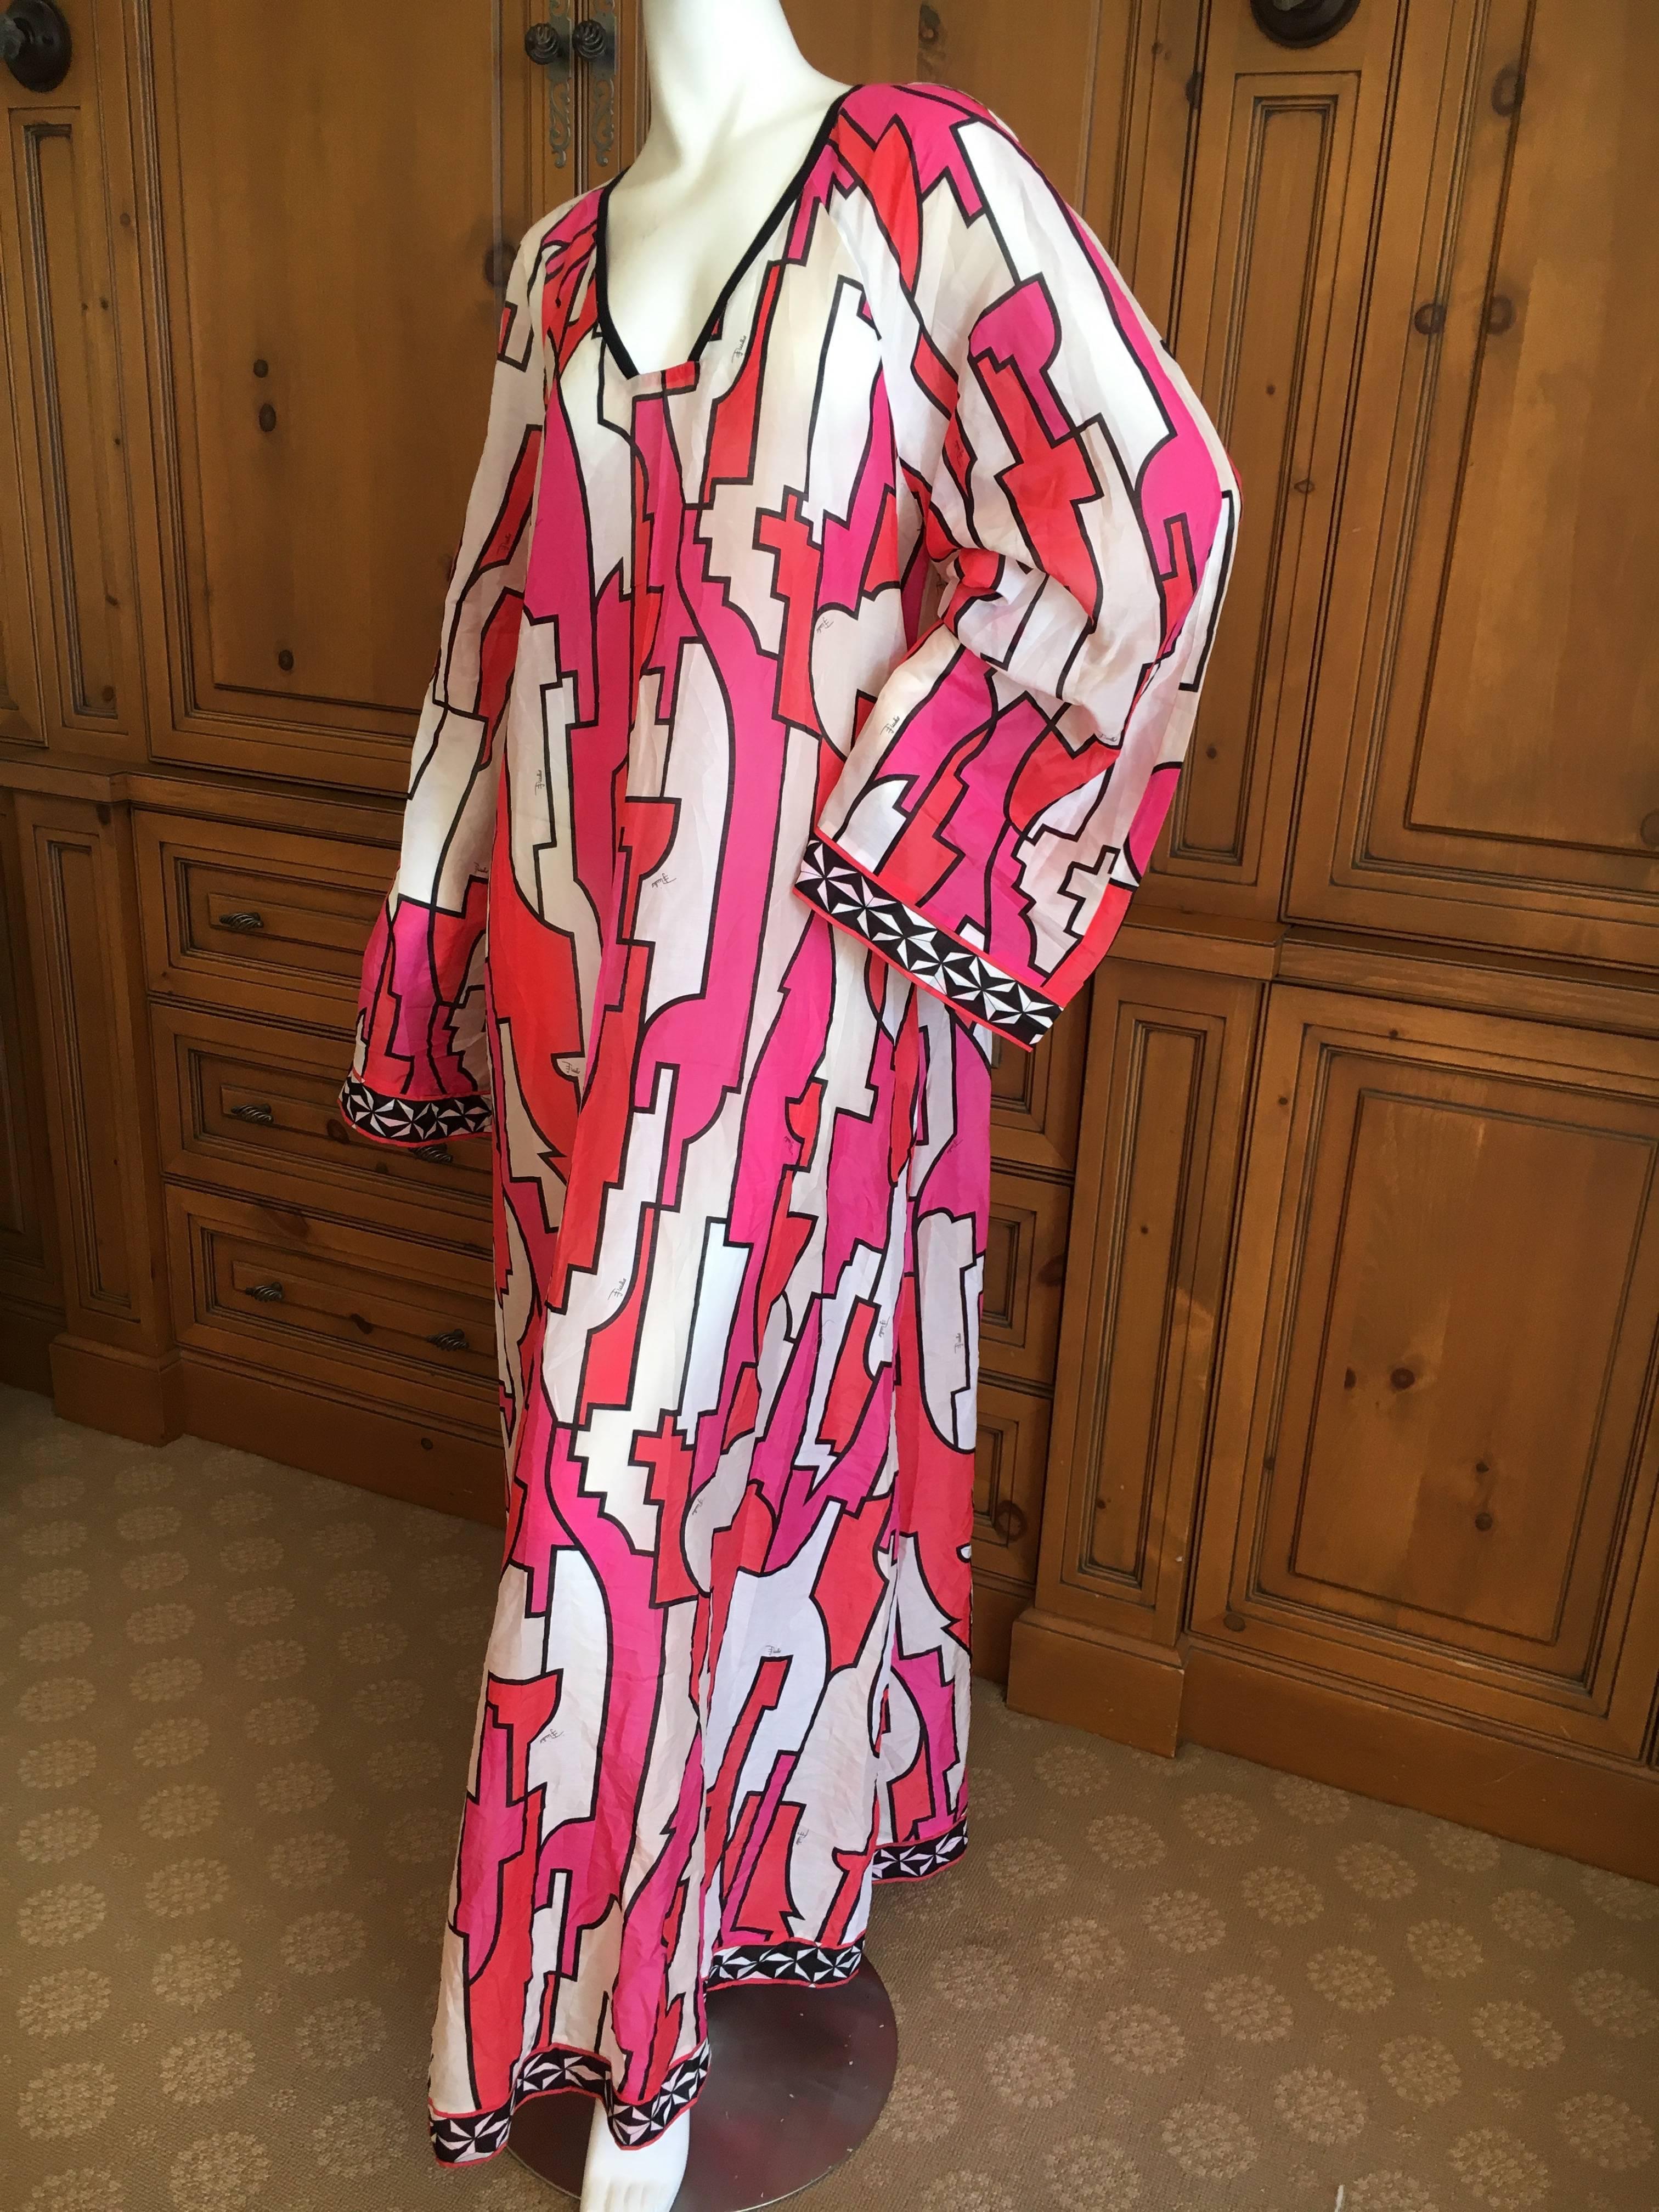 Emilio Pucci Sheer Cotton & Silk Blend Caftan Dress.
Size 42
Bust 40"
Waist 38"
Hips 44"
Length 60"
Excellent condition